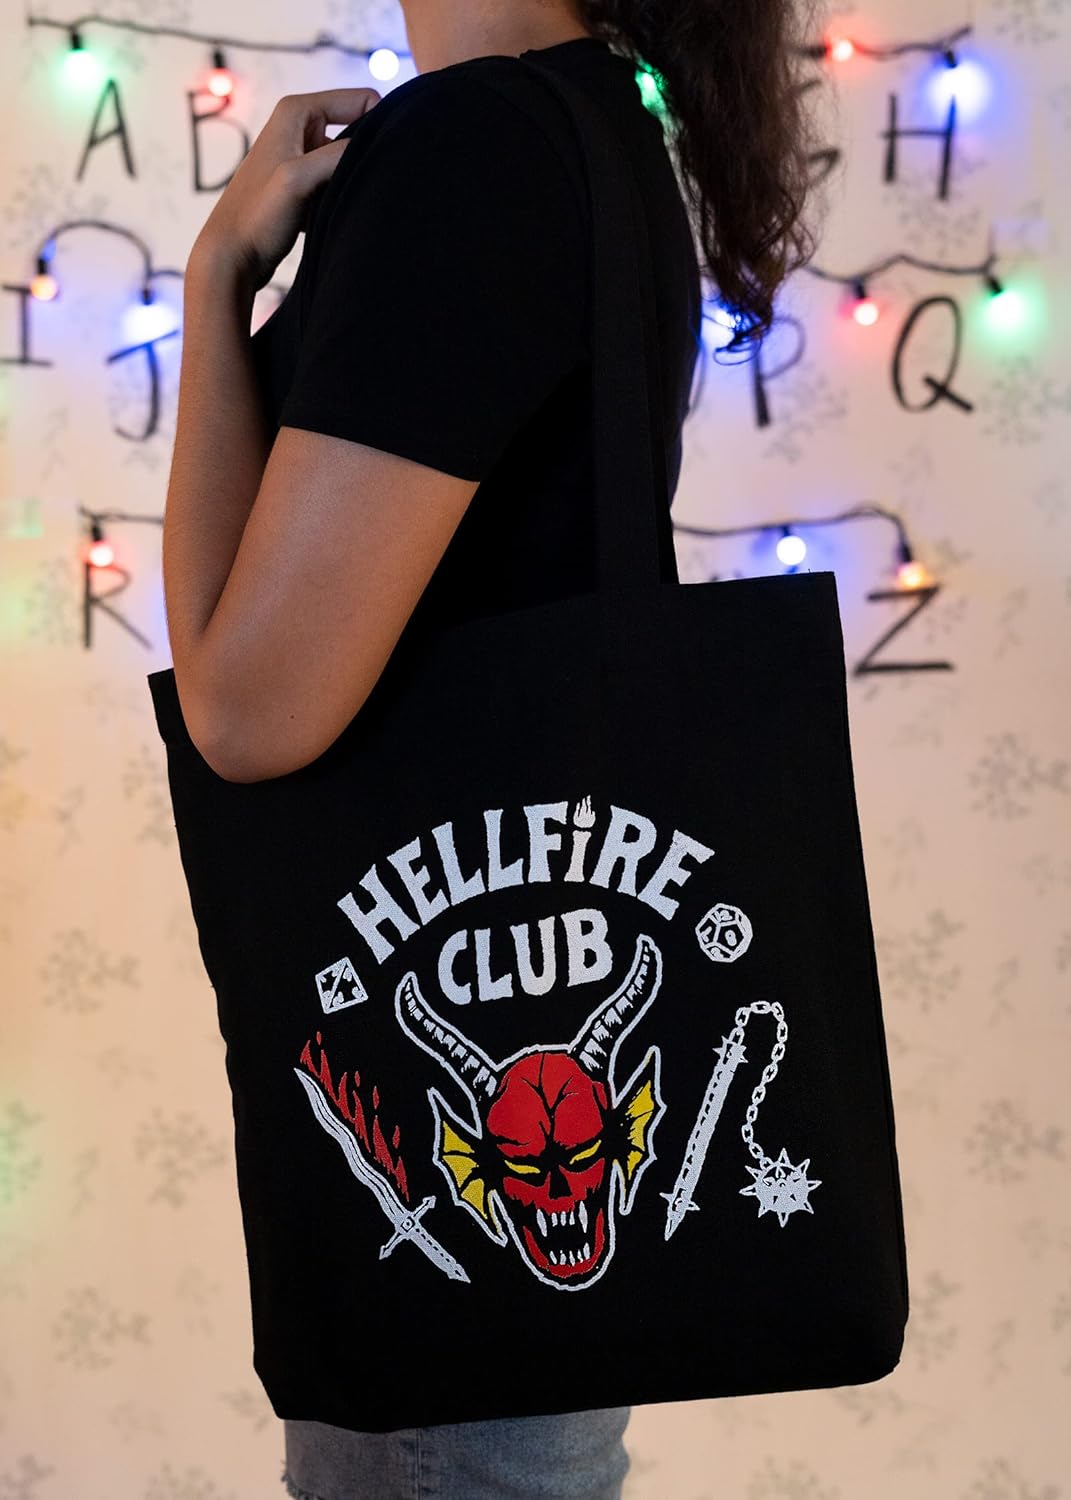 Grupo Erik Stranger Things Hellfire Club Cotton Tote Bag - Cotton Shopping Bag